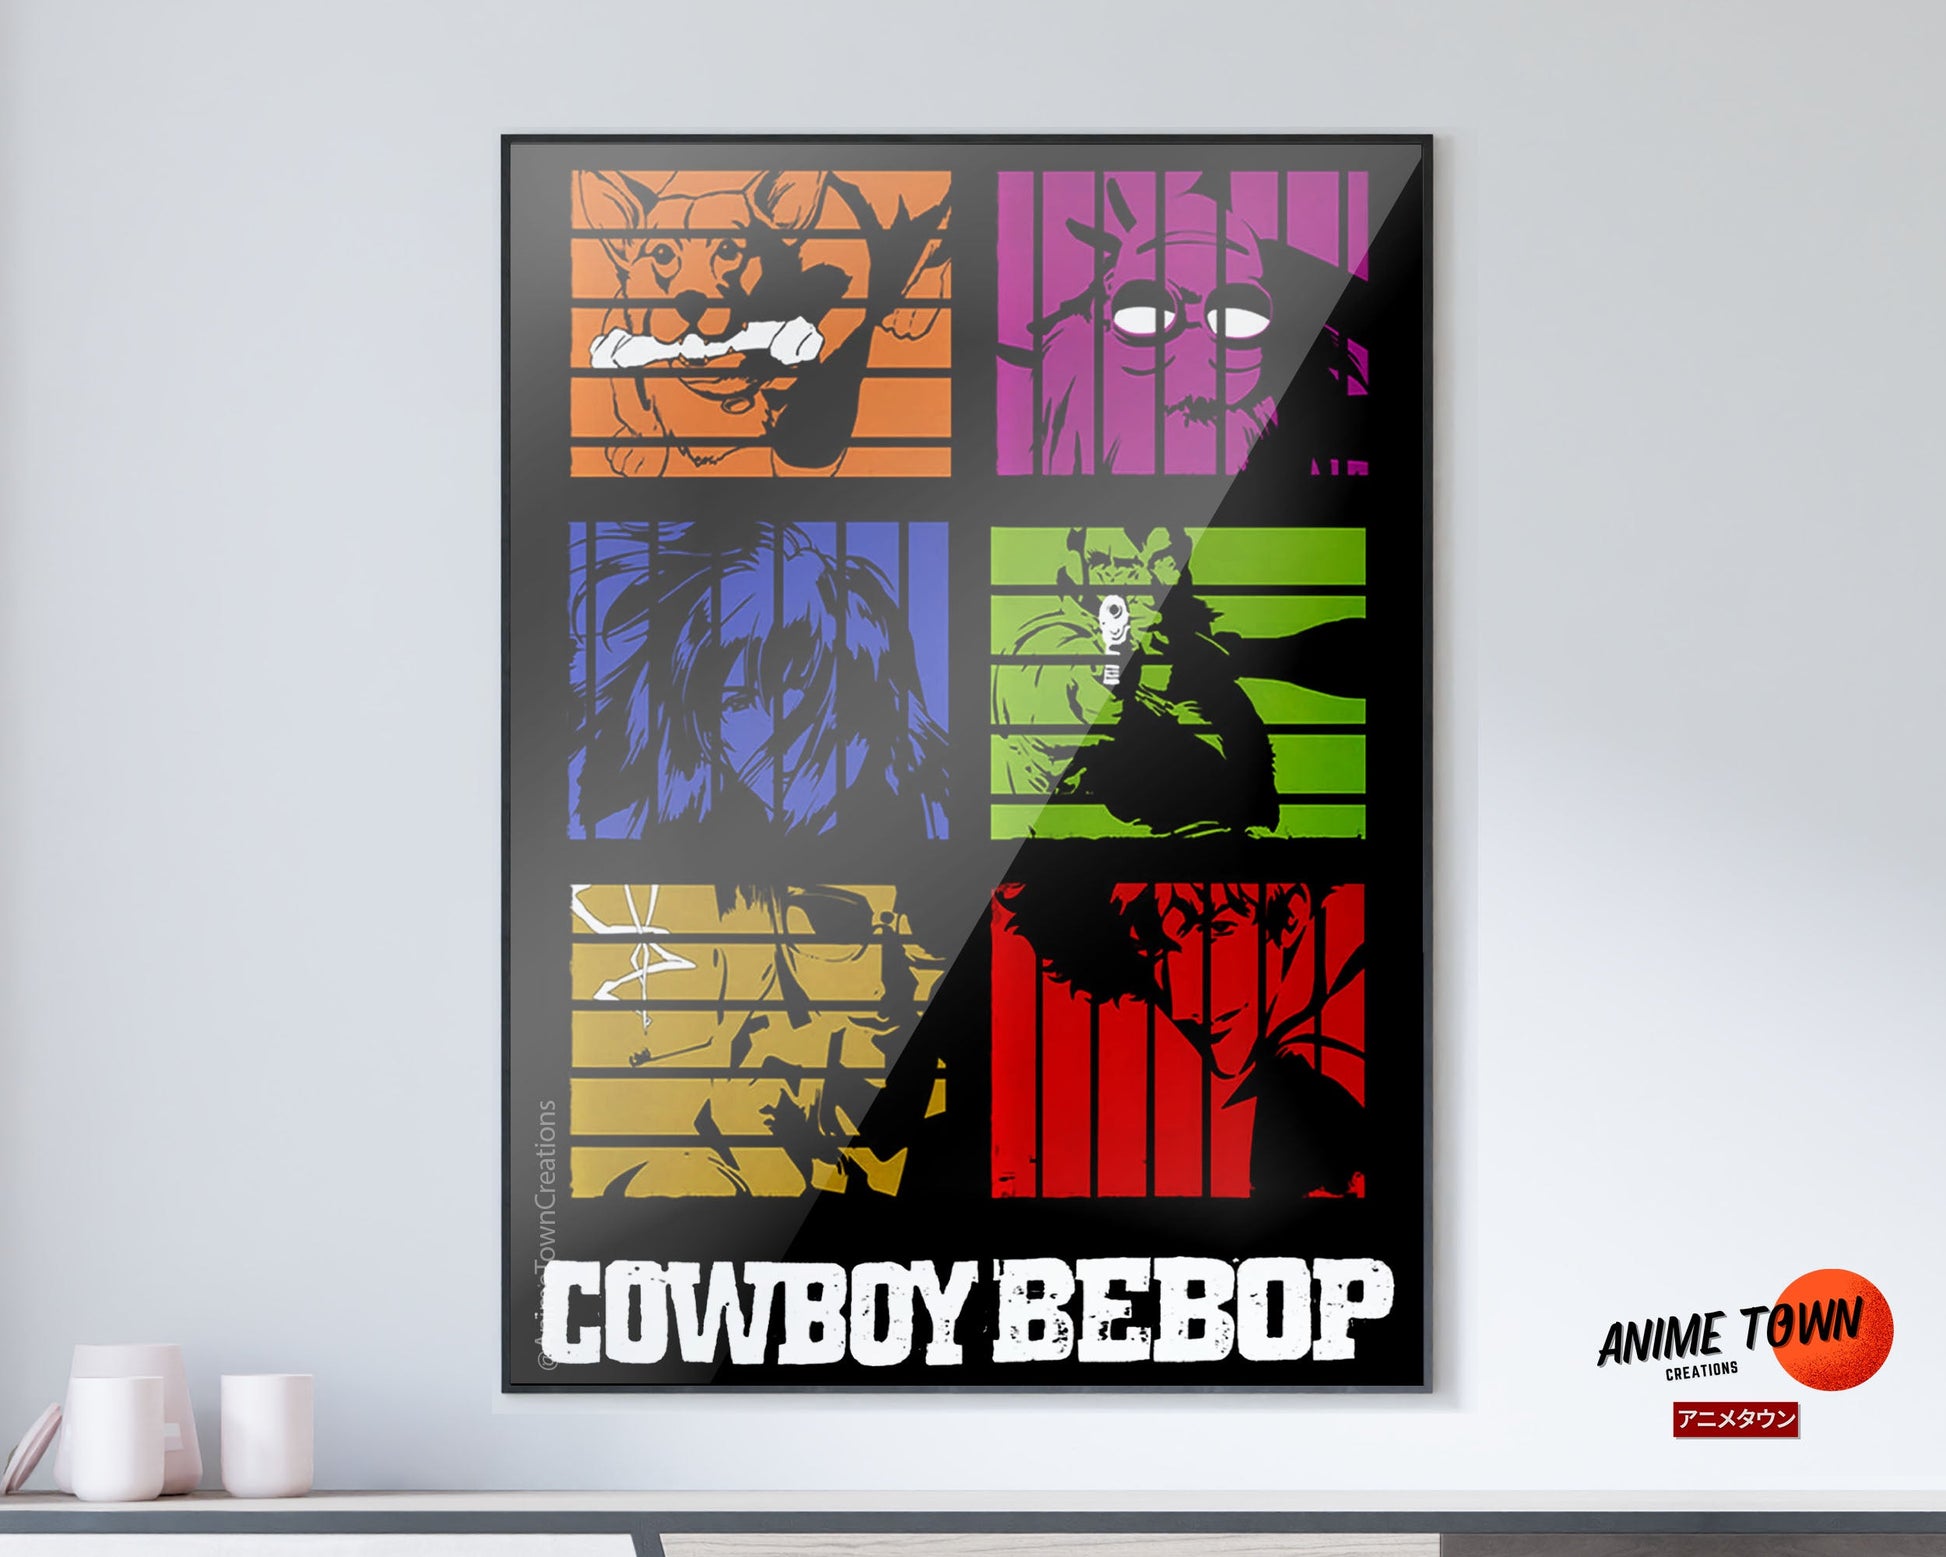 Anime Town Creations Poster Cowboy Bebop Minimalist 5" x 7" Home Goods - Anime Cowboy Bepop Poster